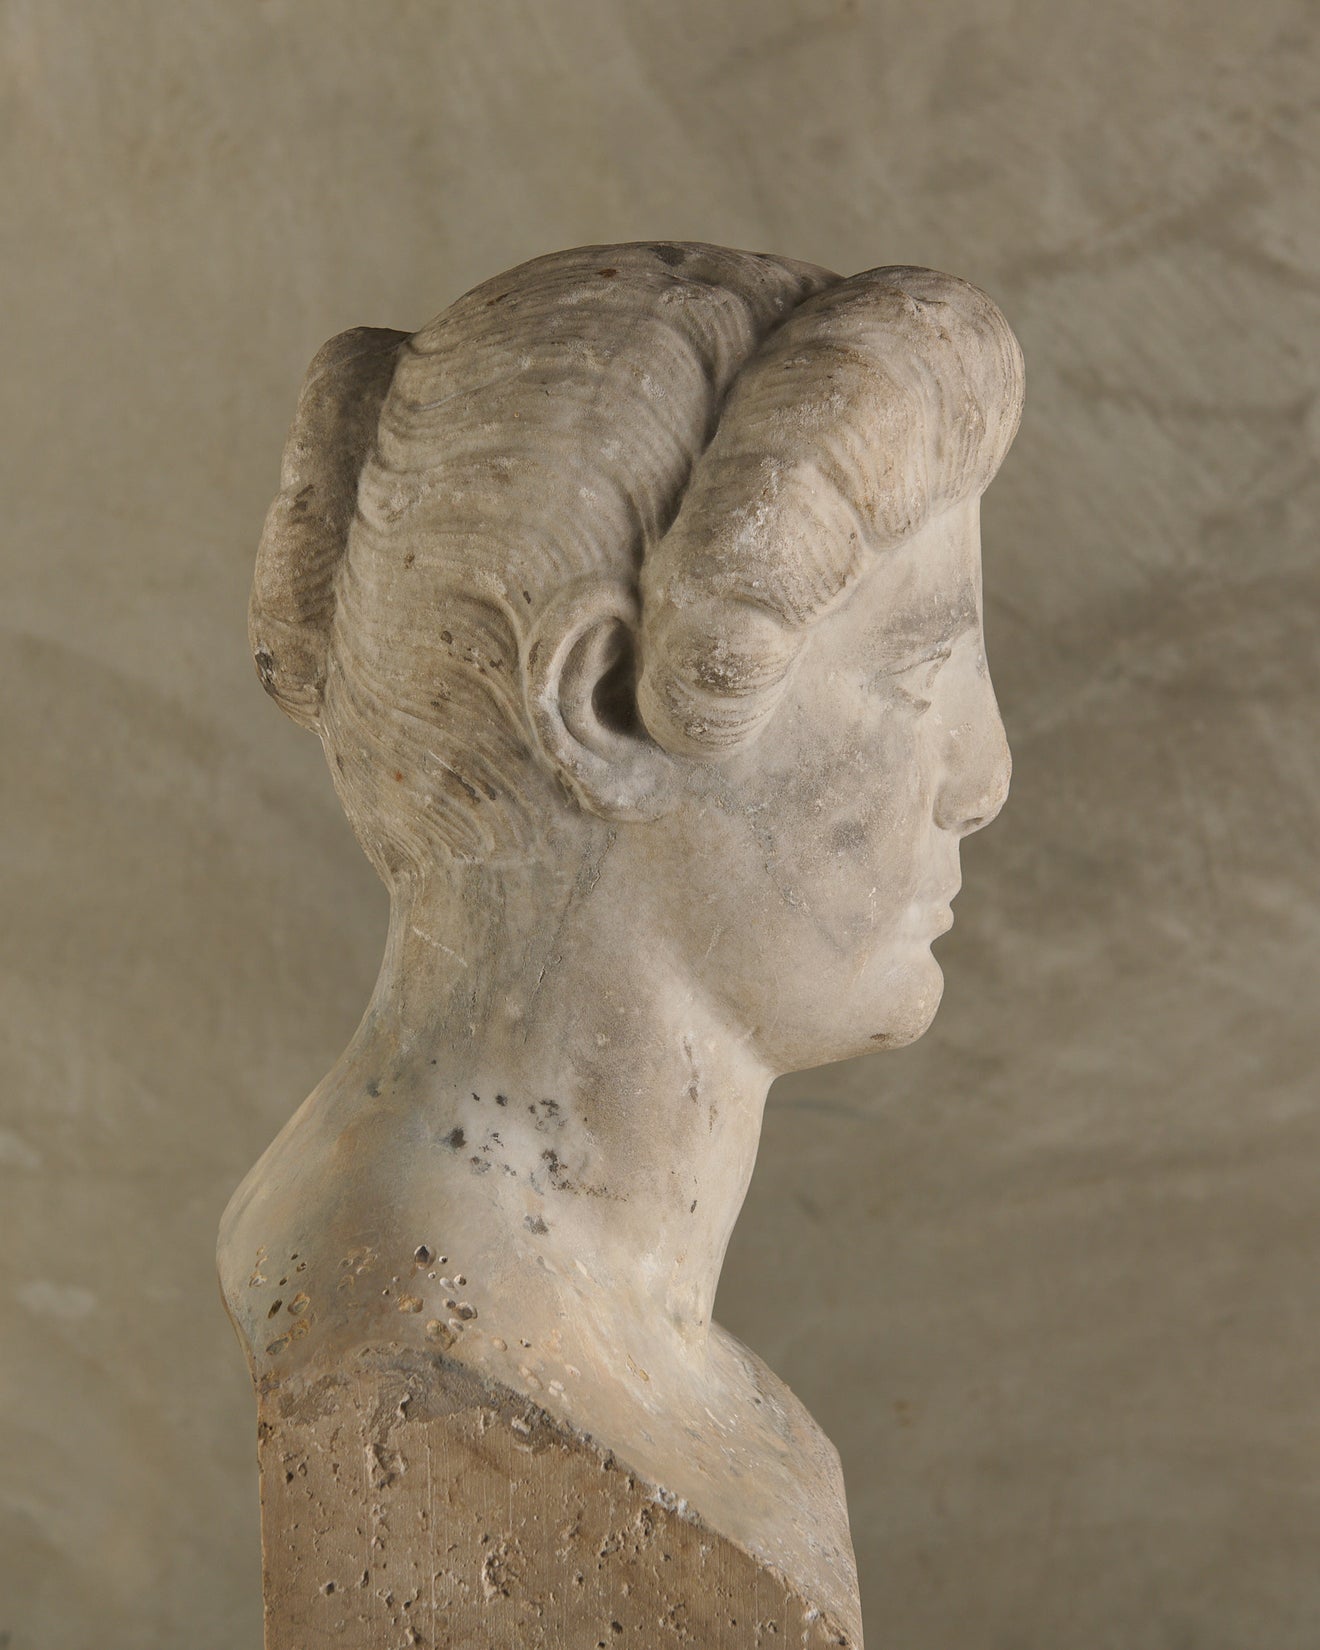 LIMESTONE PORTRAIT HEAD OF A WOMAN RESEMBLING CLEOPATRA VII ON TRAVERTINE PLINTH